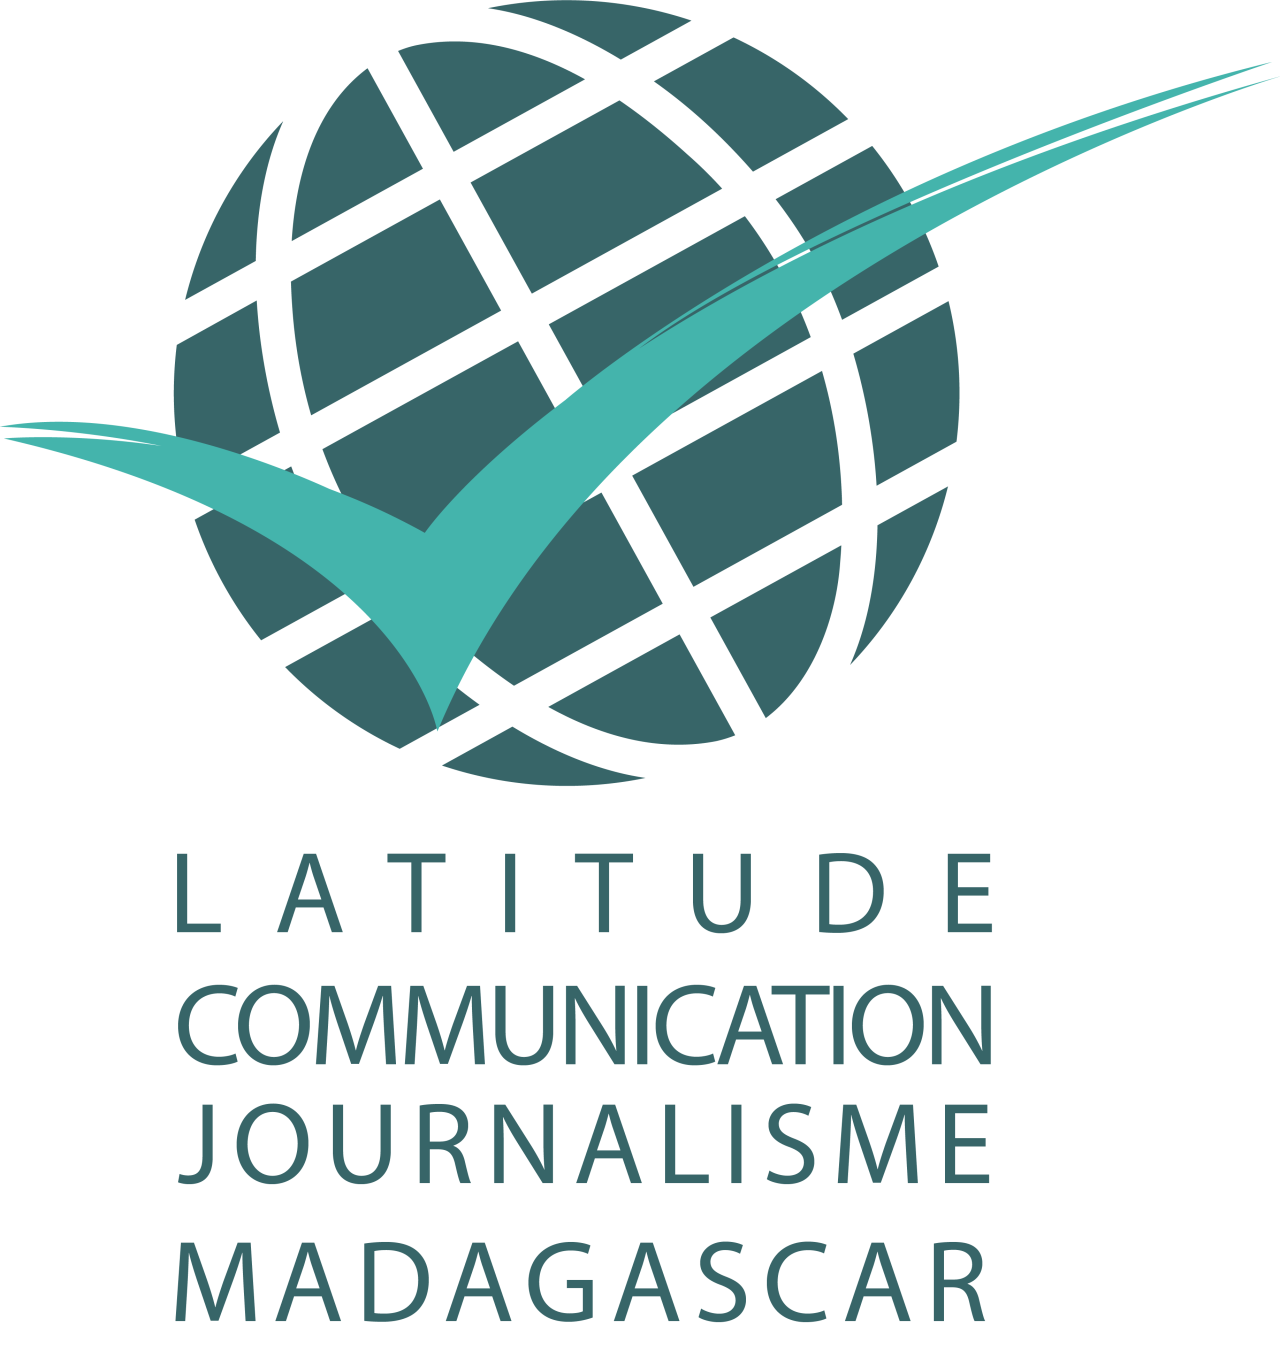 LCJ Madagascar